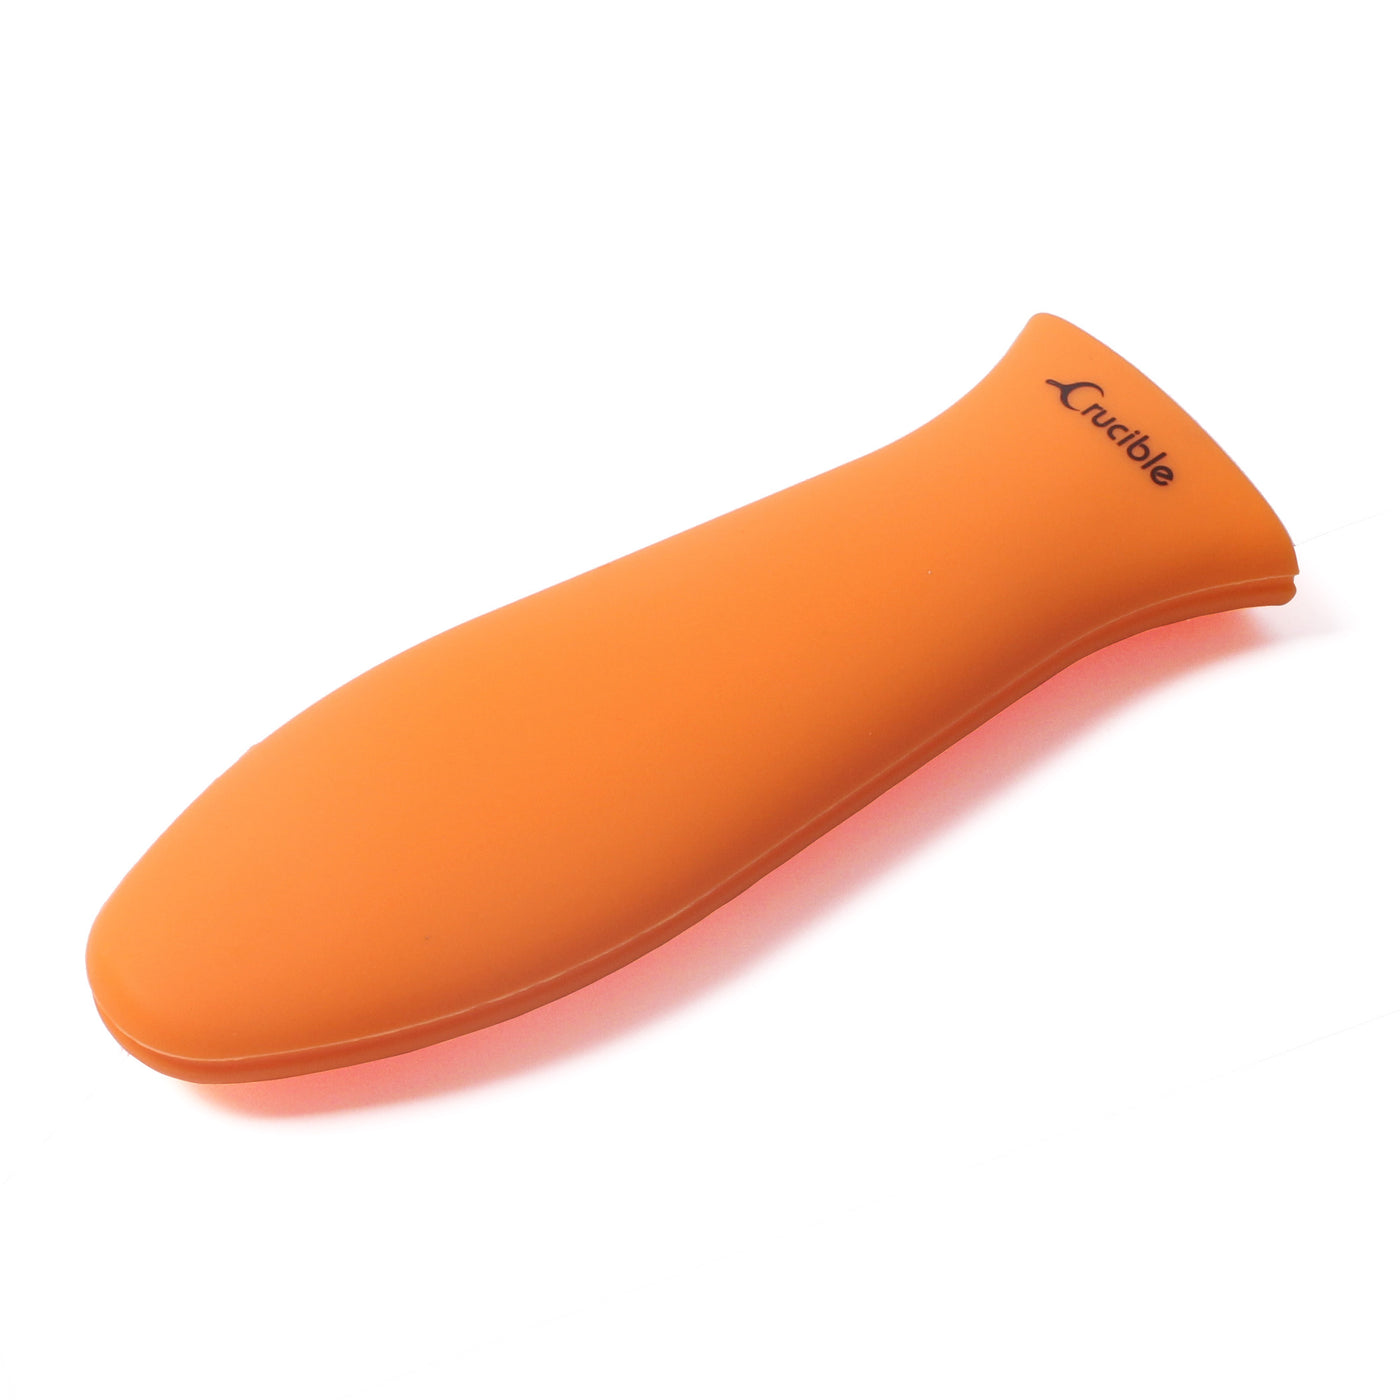 Silikon-Topflappen (Orange Large) für Gusseisenpfannen